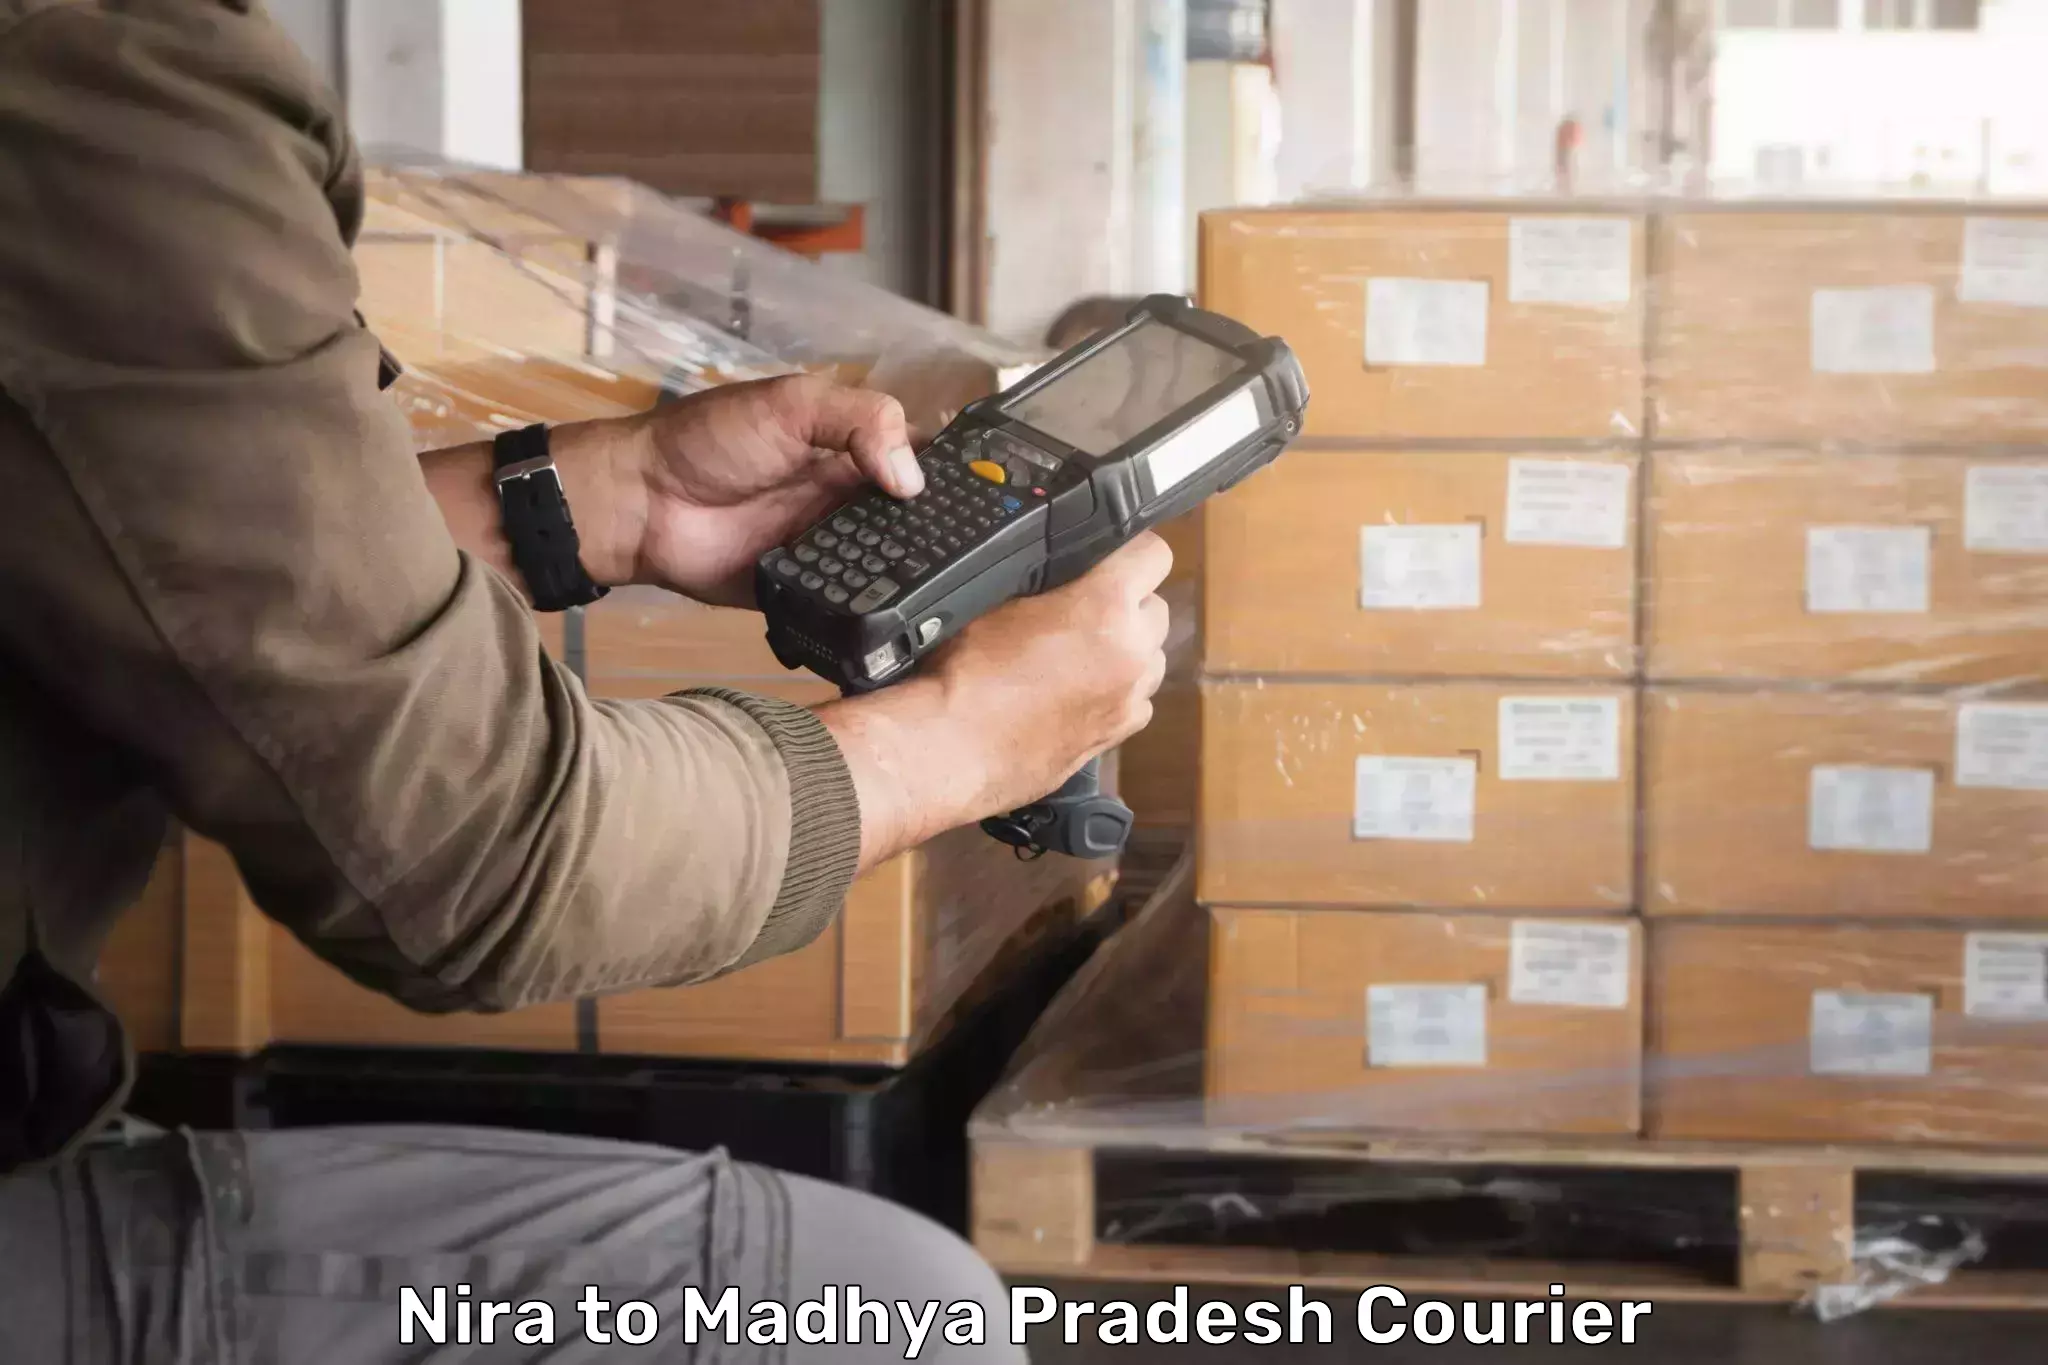 Modern courier technology Nira to Gwalior